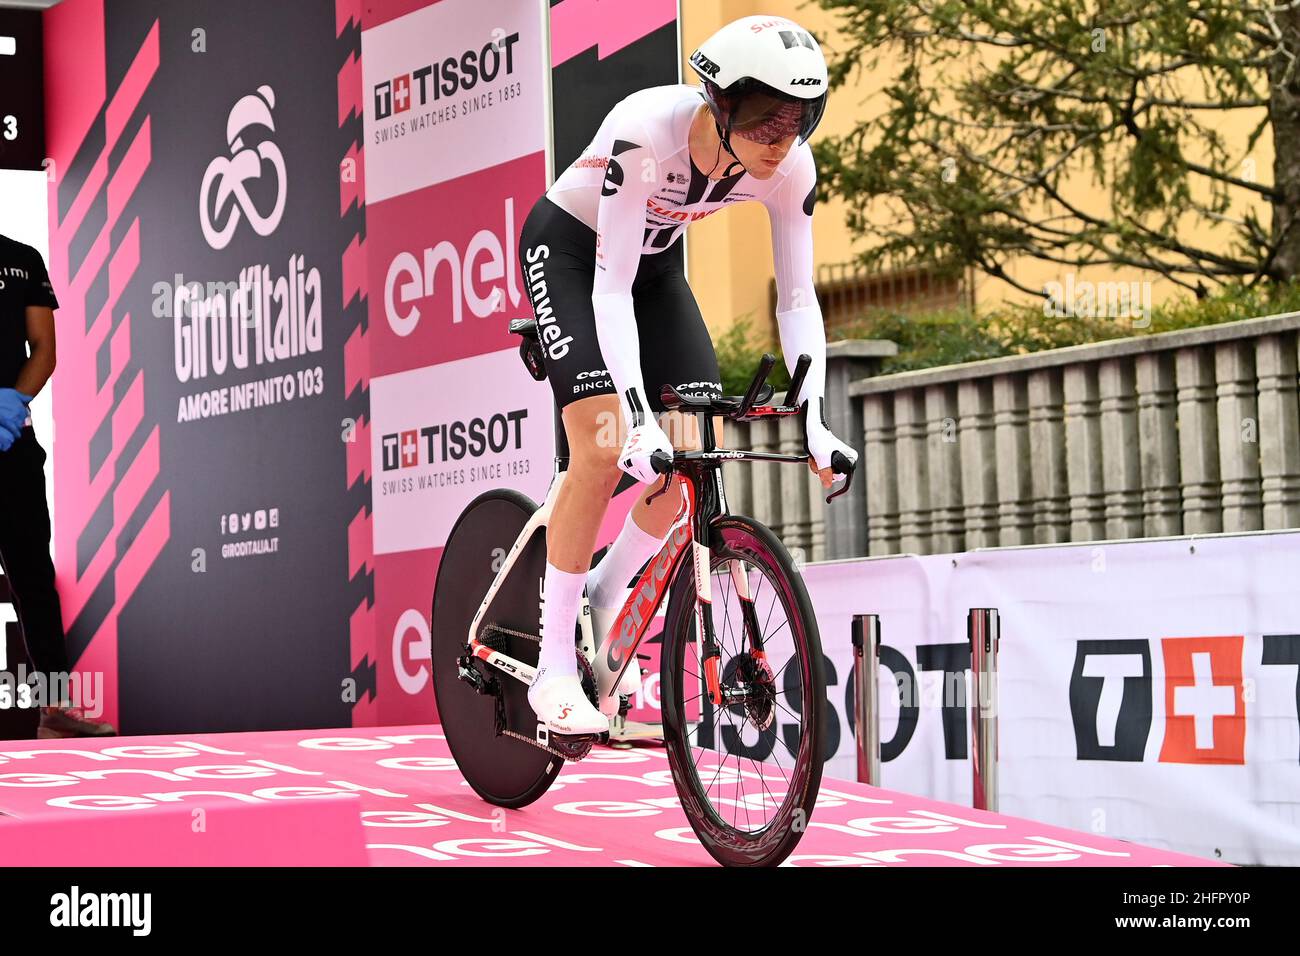 Marco Alpozzi/LaPresse 25. Oktober 2020 Italien Sport Cycling Giro d'Italia 2020 - Ausgabe 103th - Etappe 21 - ITT - von Cernusco sul Naviglio nach Mailand im Bild: Stockfoto